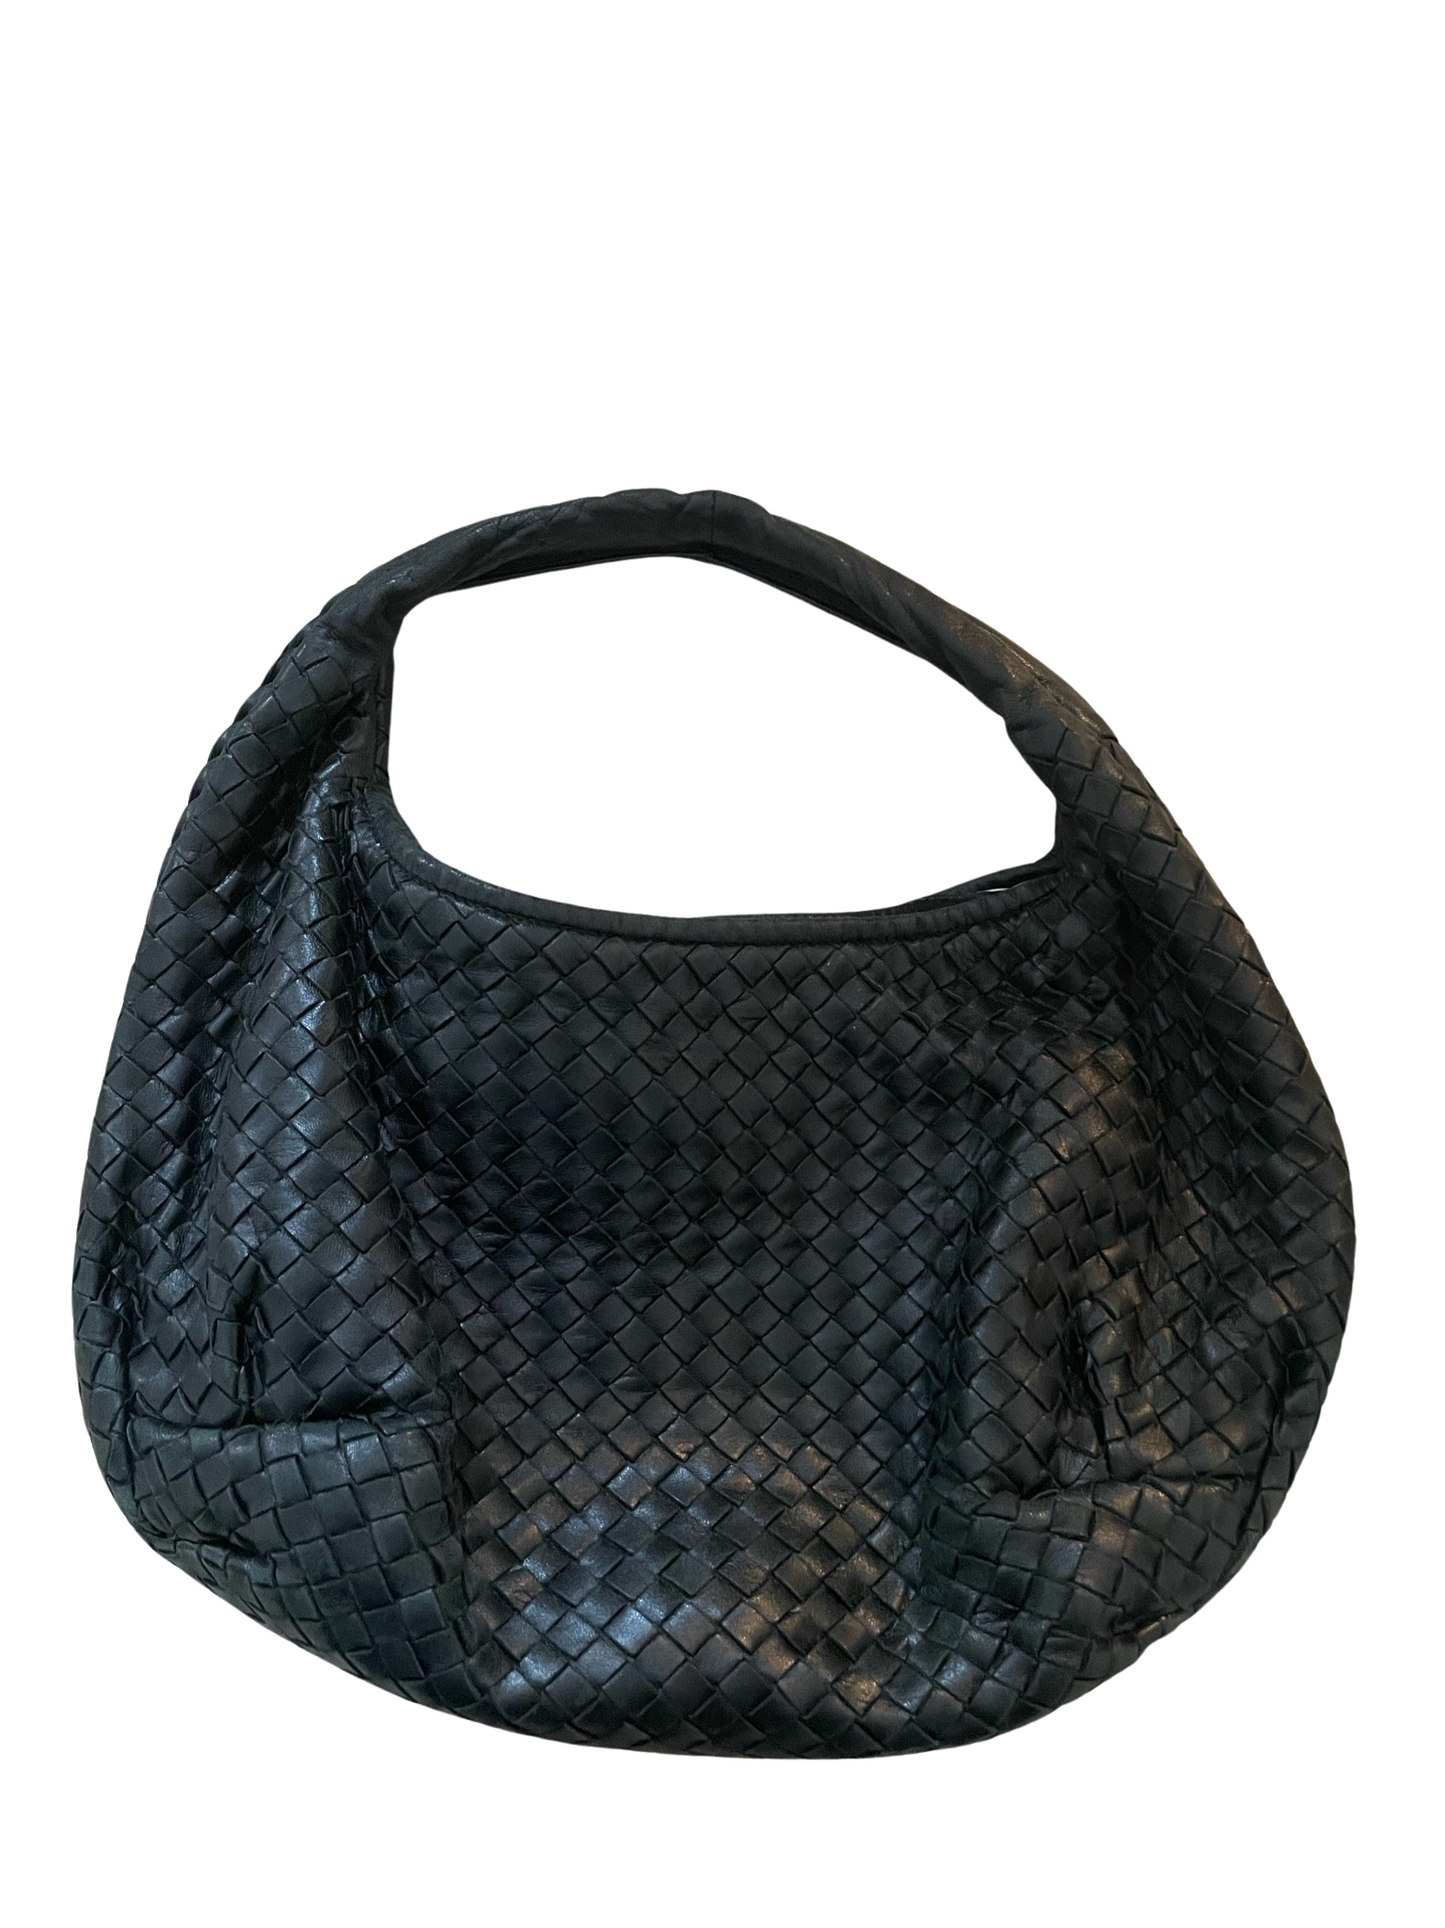 Bottega Veneta Leather Handbag Black